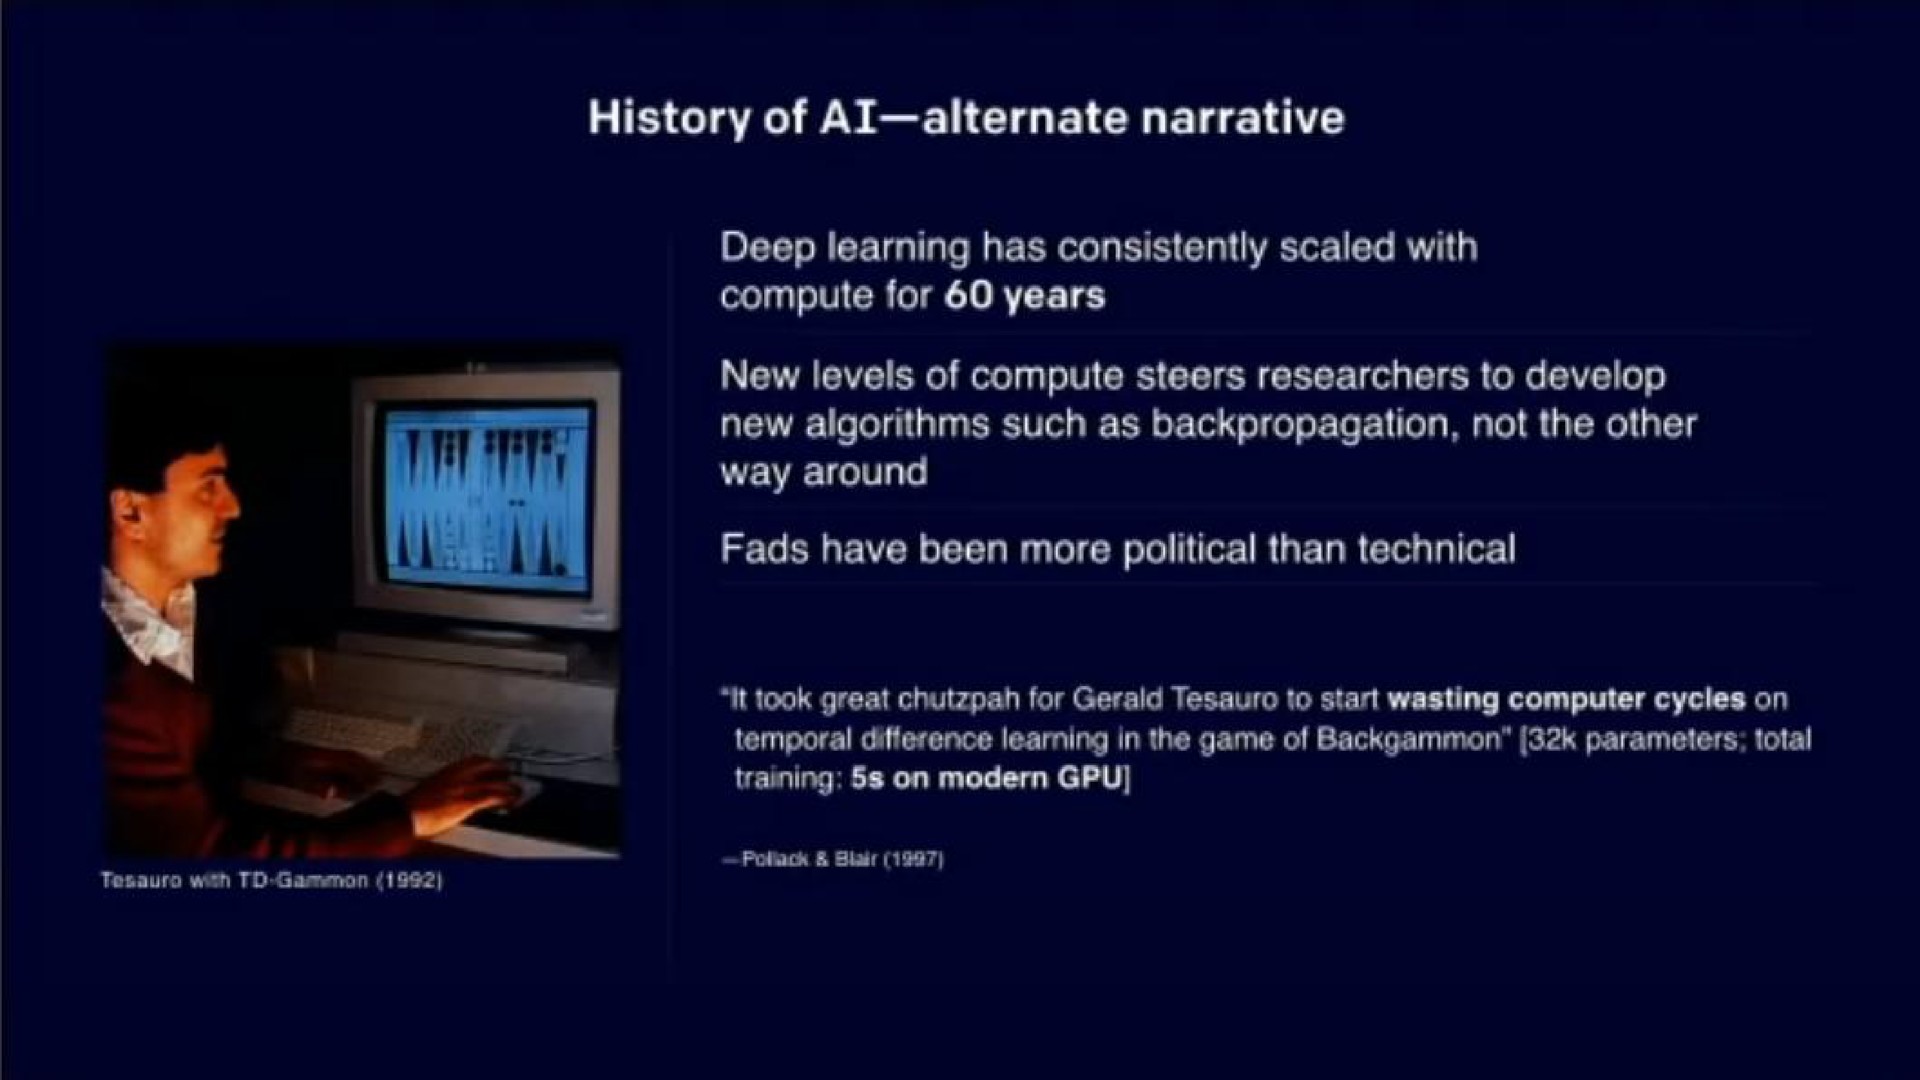 history of alternate narrative | OpenAI